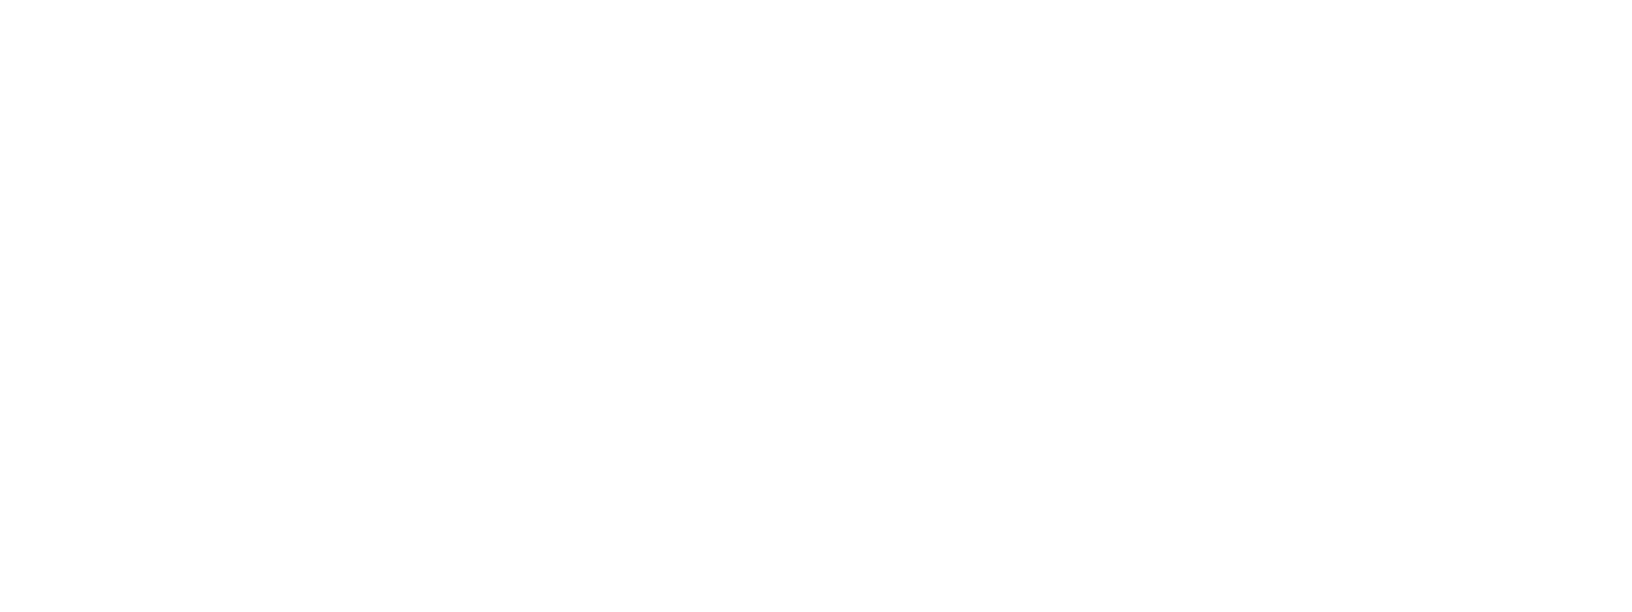 CCC Intelligent Solutions logo for dark backgrounds (transparent PNG)